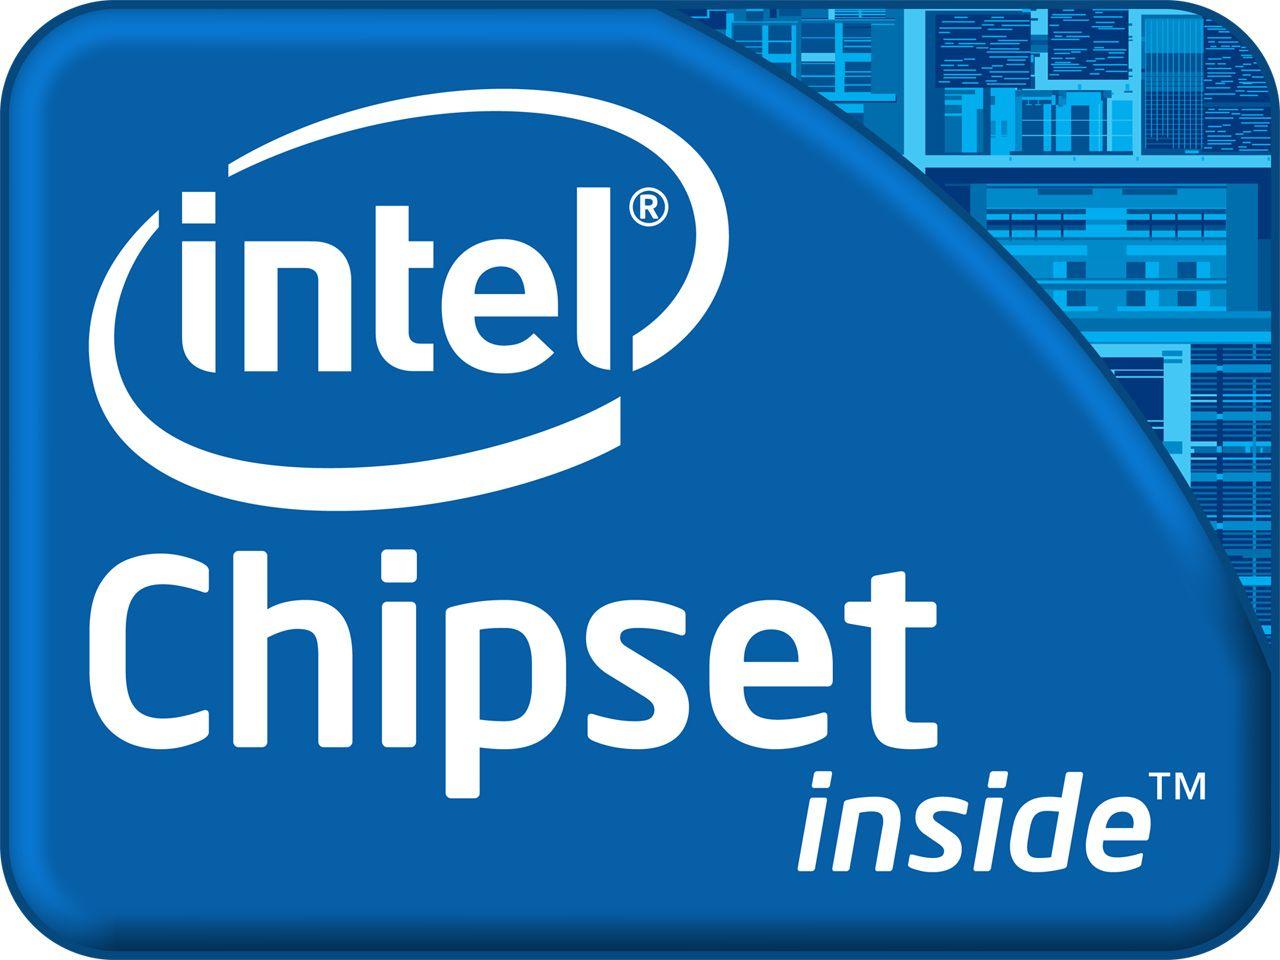 Chipset Logo - Image - 02393950-photo-logo-intel-chipset-inside.jpg | Logo Timeline ...